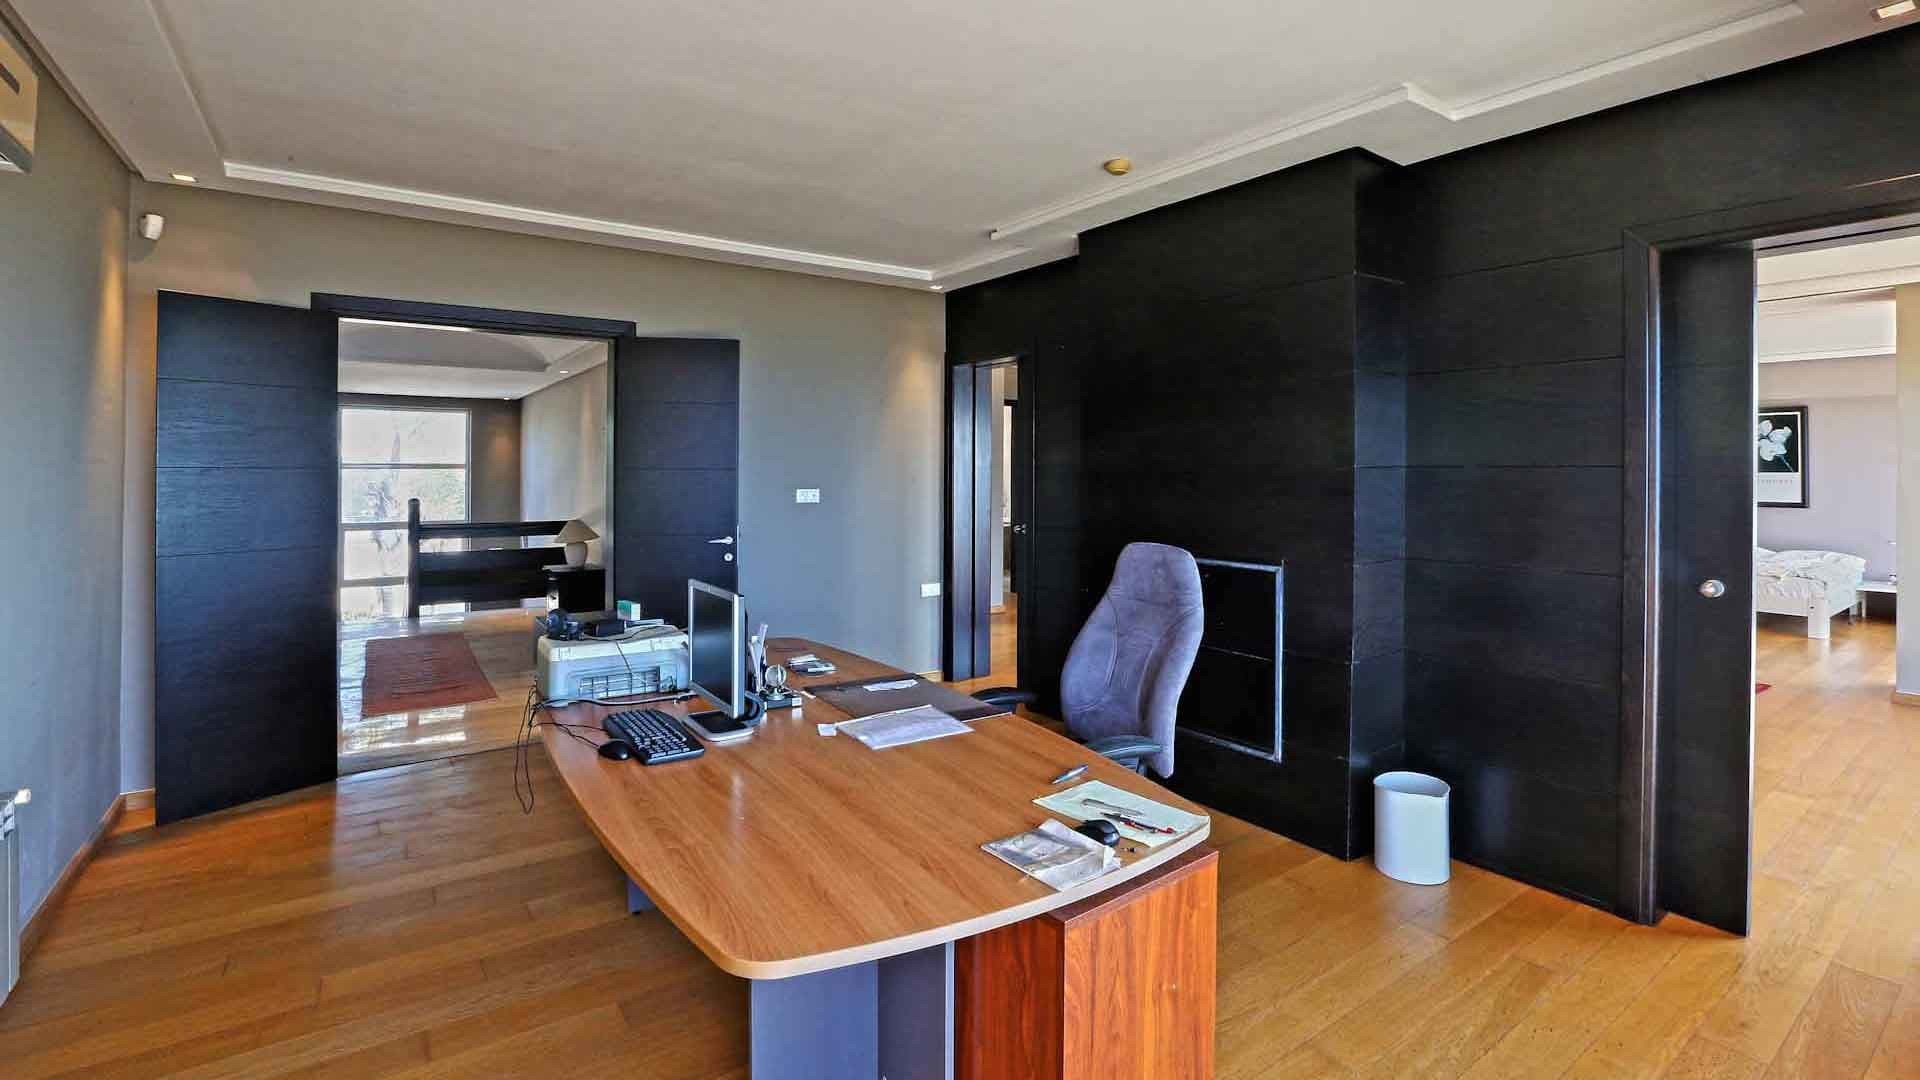 4 Bedroom Villa For Sale Marrakech Lp08710 17558deab0129600.jpg